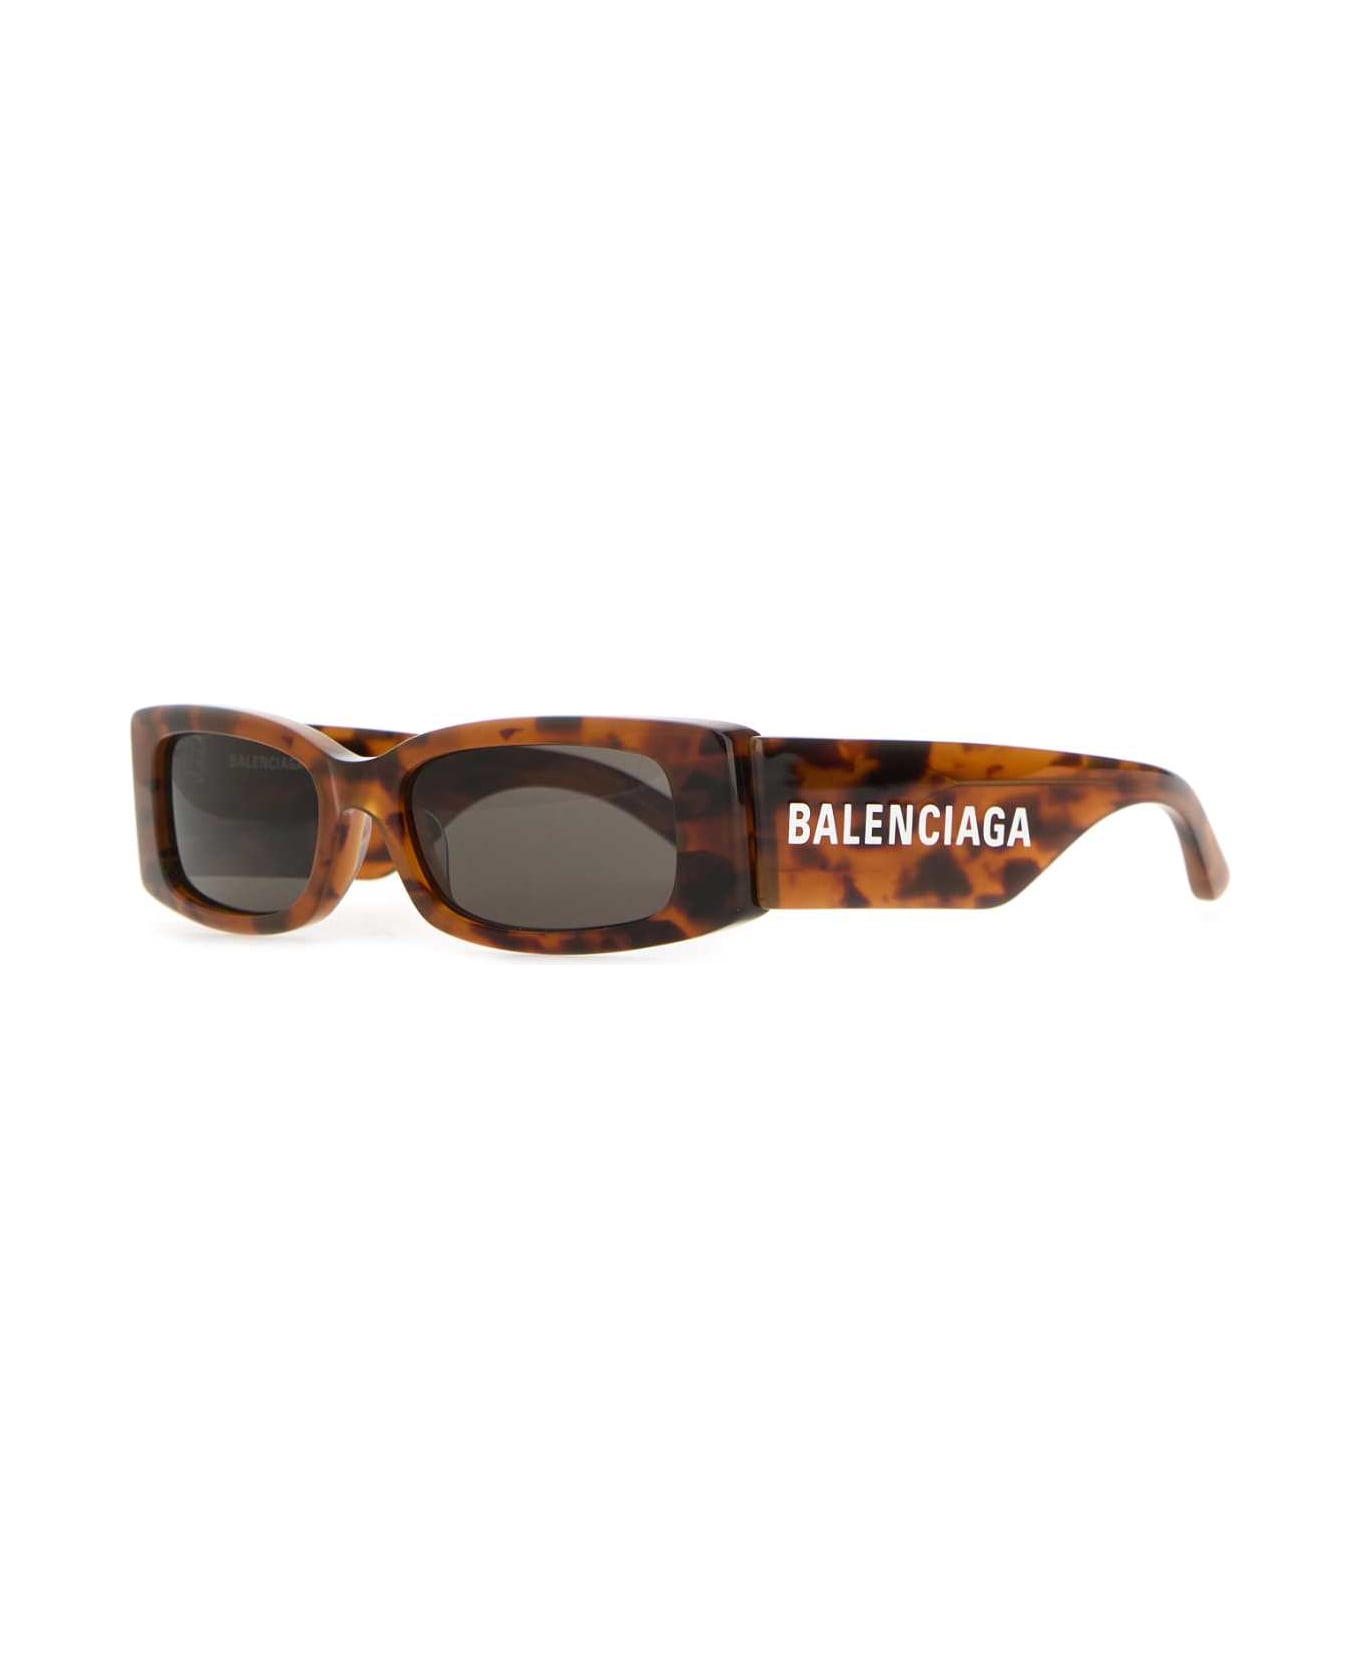 Balenciaga Printed Acetate Max Rectangle Sunglasses - STRETCHHAVANA